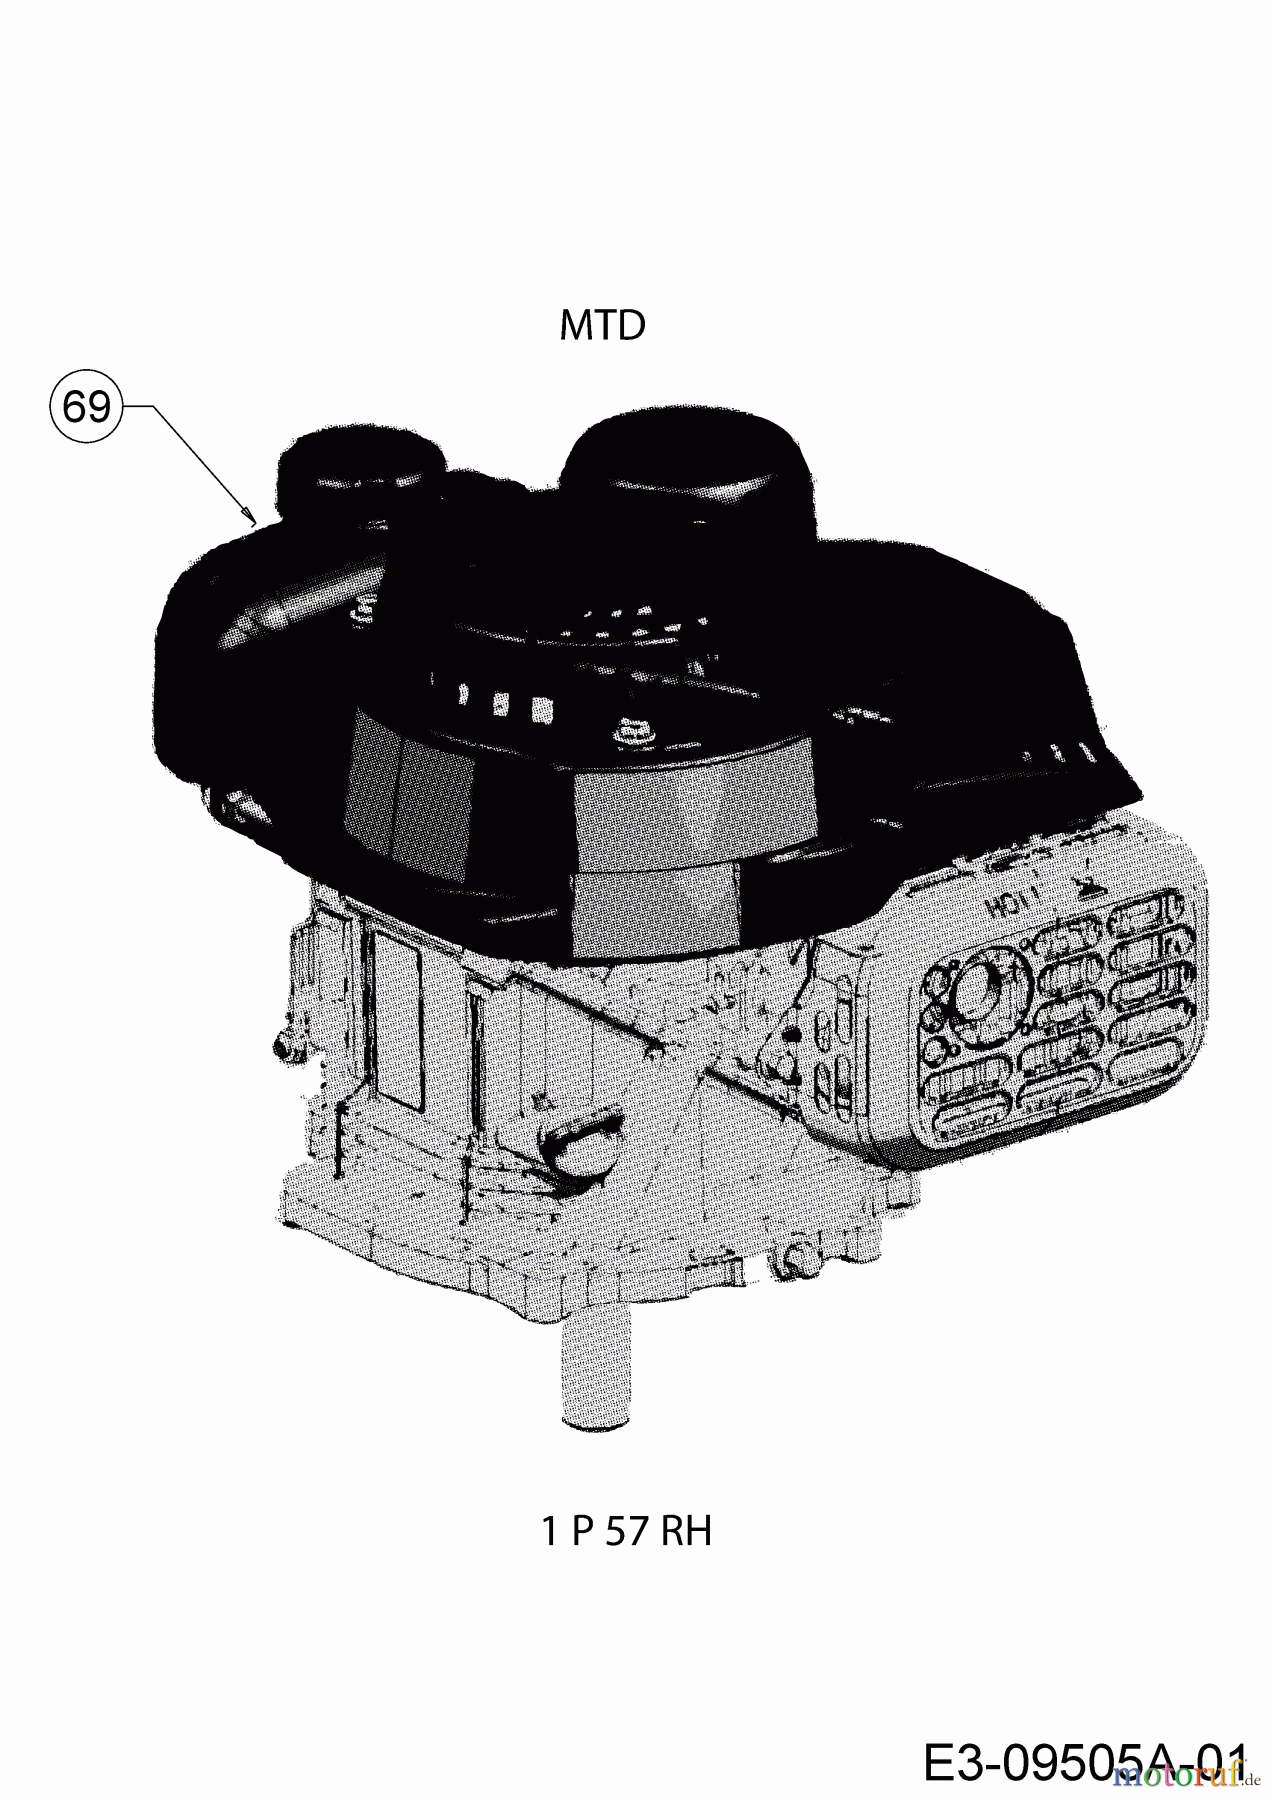  MTD Petrol mower P 46 T 11D-TASJ600  (2020) Engine MTD